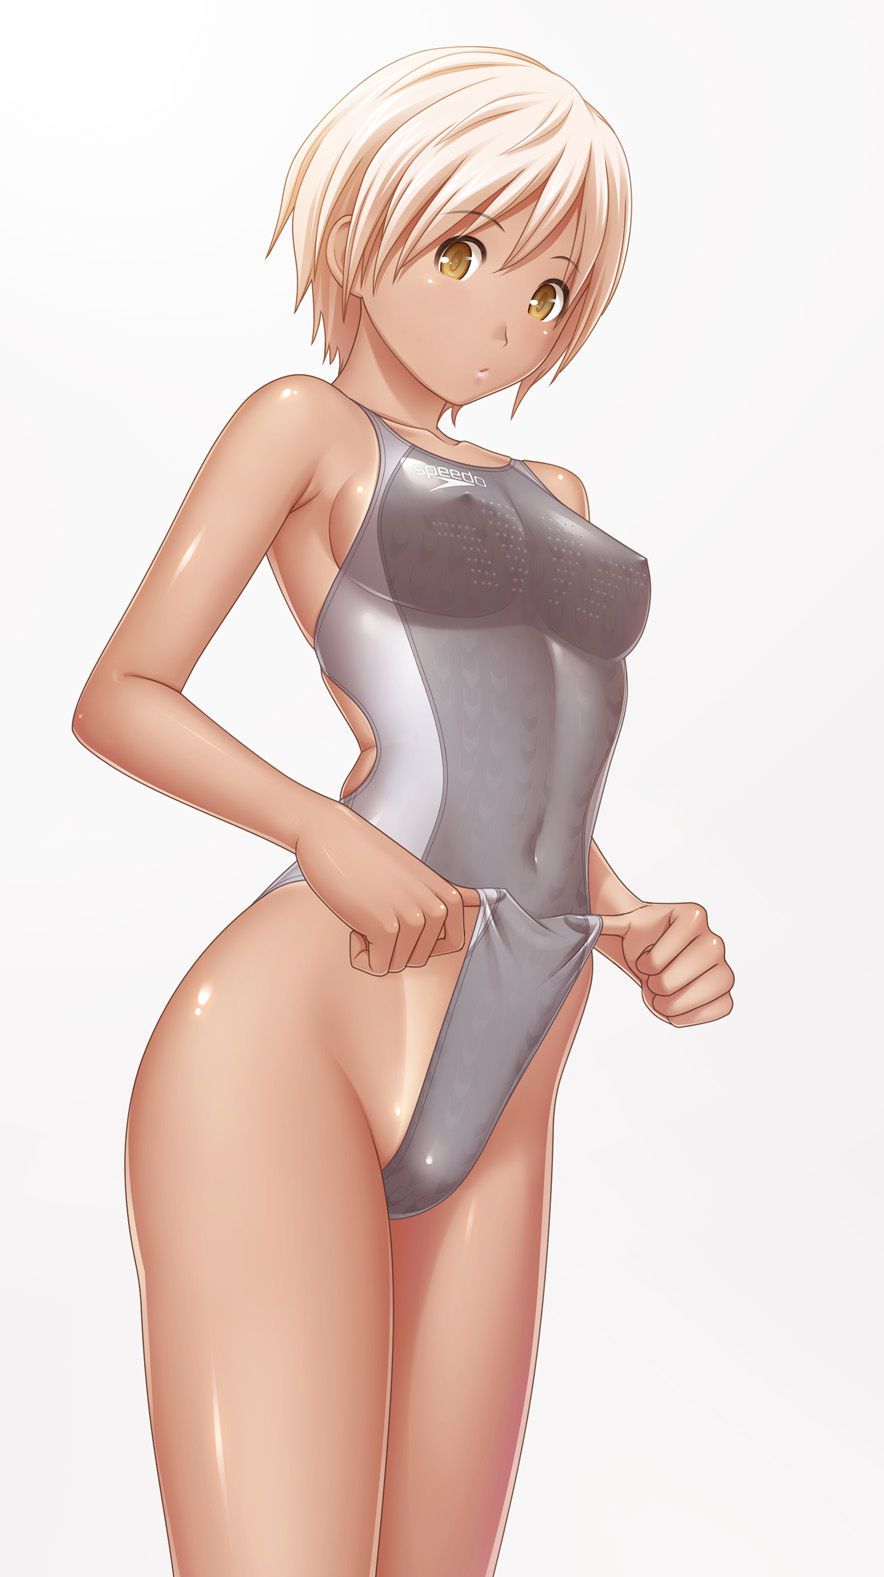 (Swimsuit) Bikini Girl's Wet Image 3